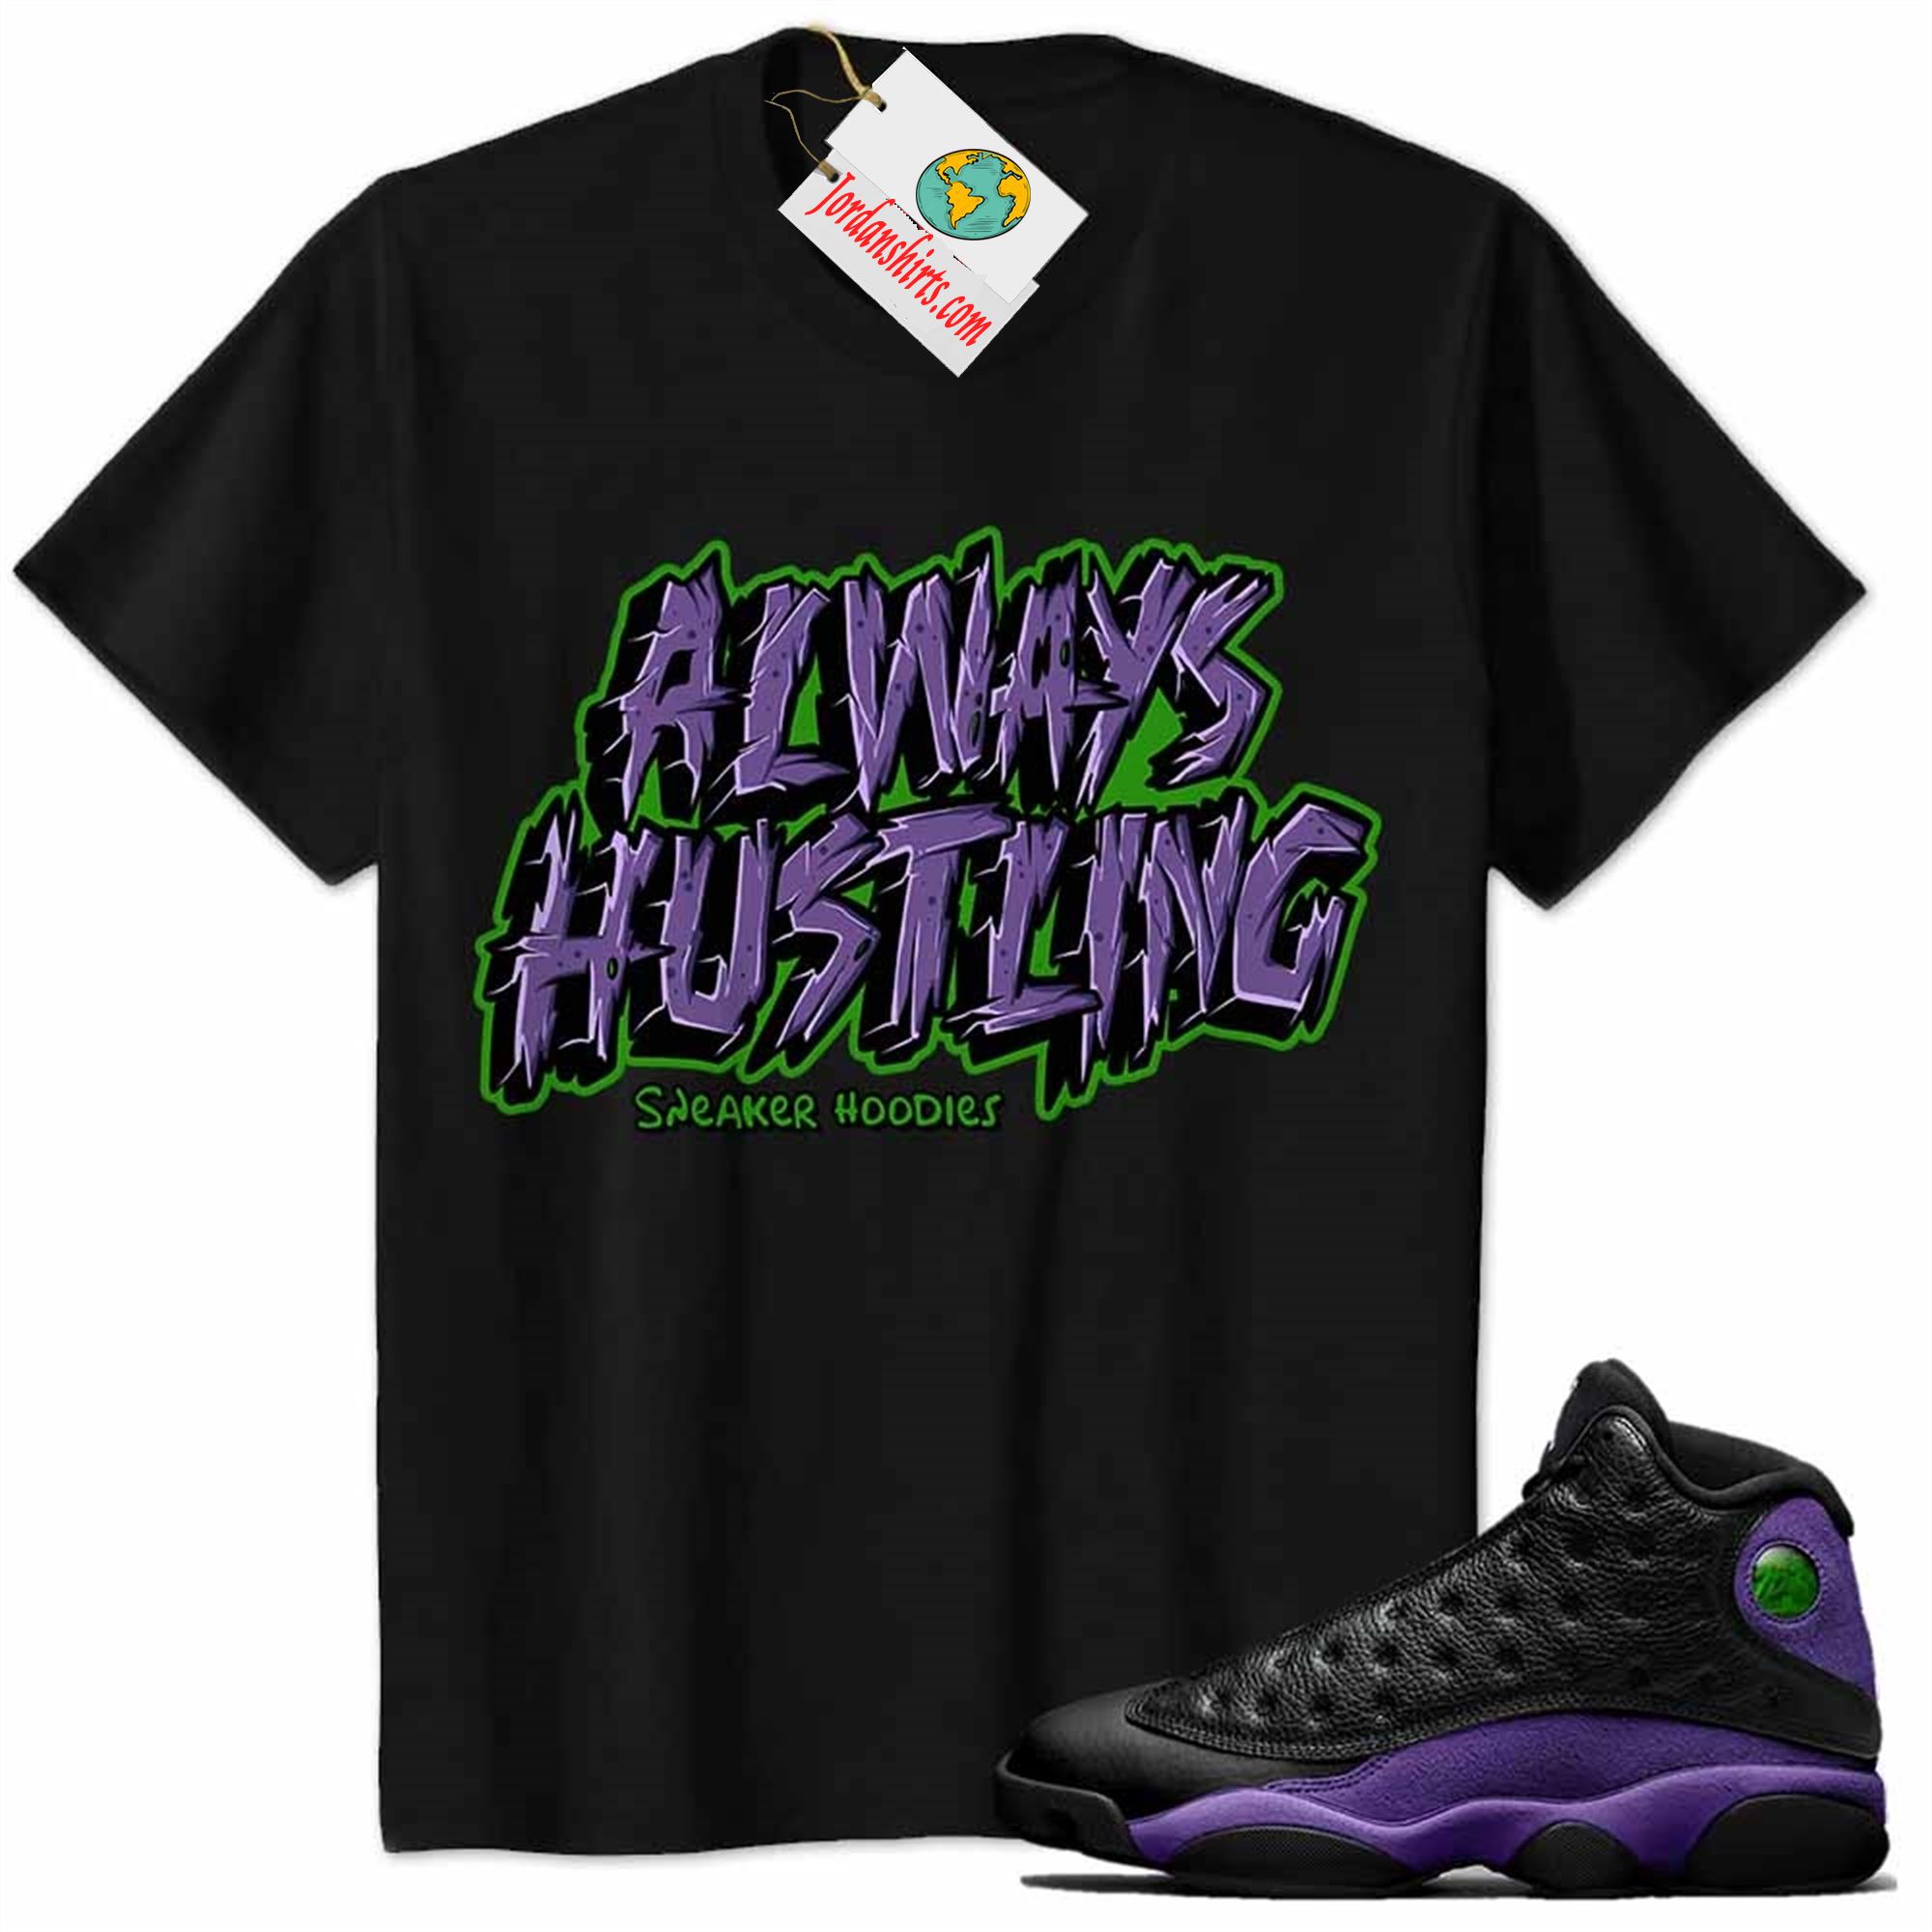 Jordan 13 Shirt, Allway Hustling Hustle Black Air Jordan 13 Court Purple 13s Size Up To 5xl